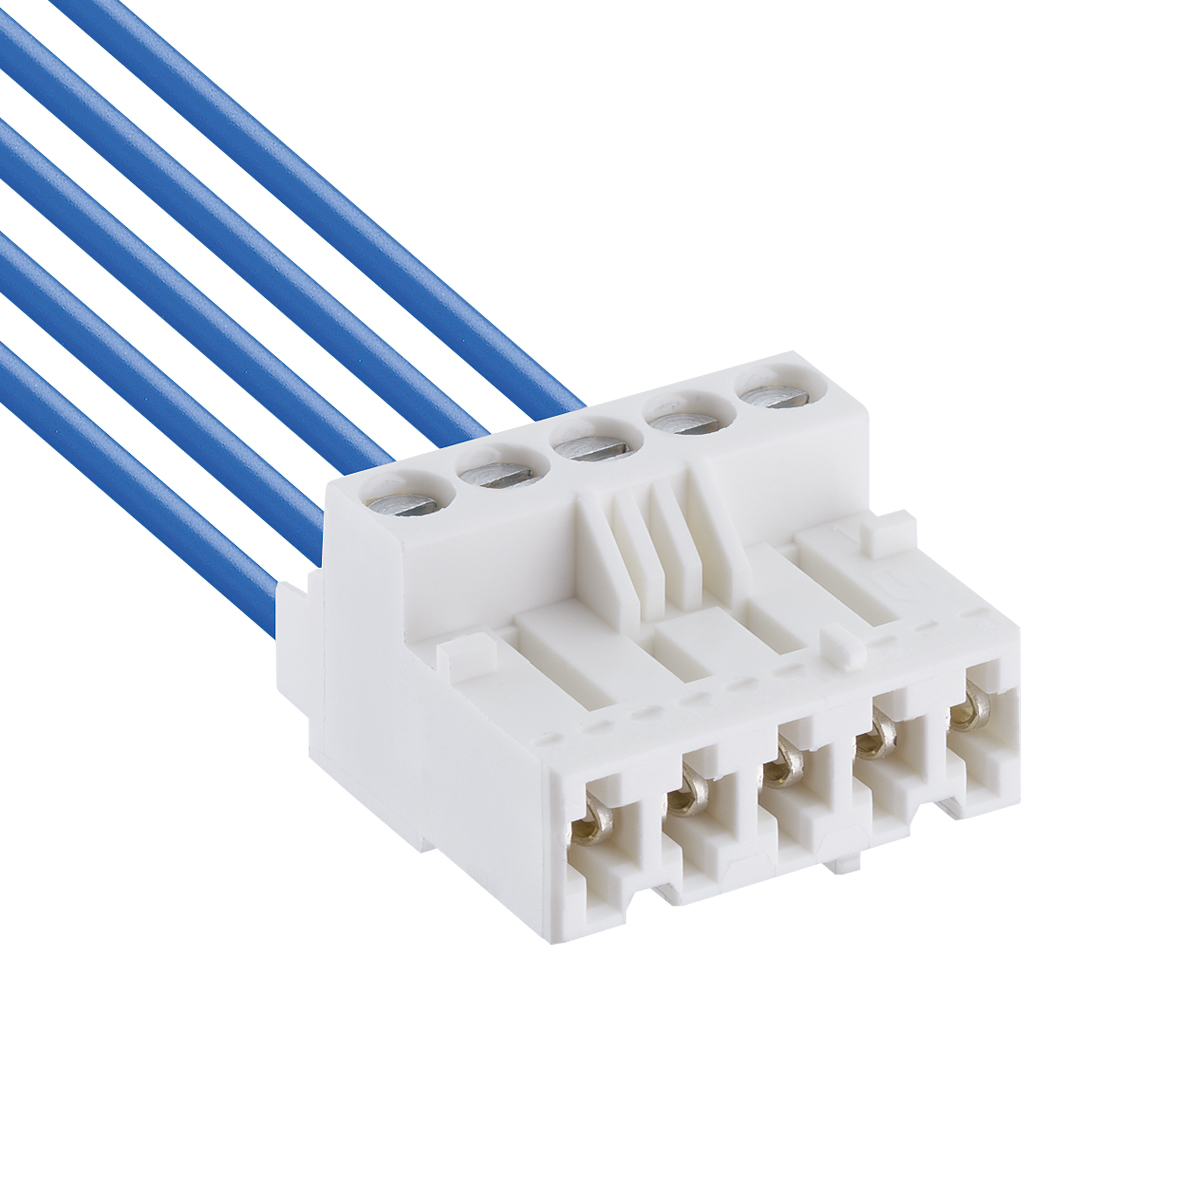 Lumberg: 3611 (Series 36 | RAST 5 connectors, pitch 5.0 mm)